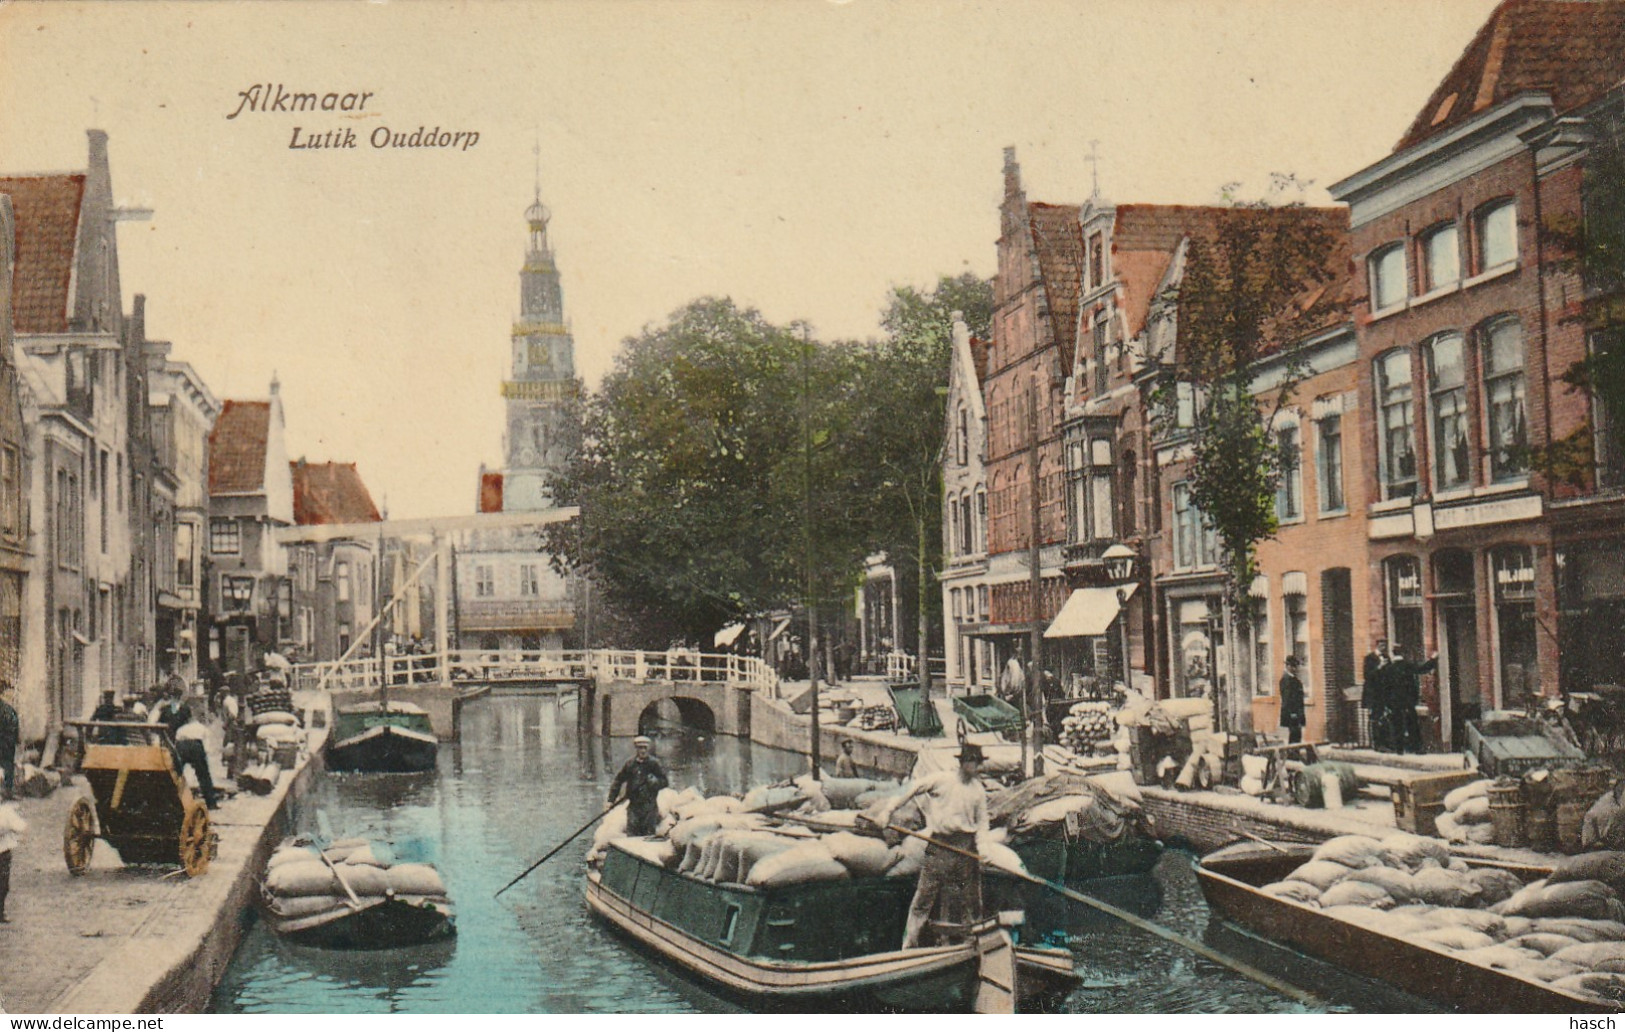 4934 57 Alkmaar, Lutik Ouddorp. 1913.  - Alkmaar